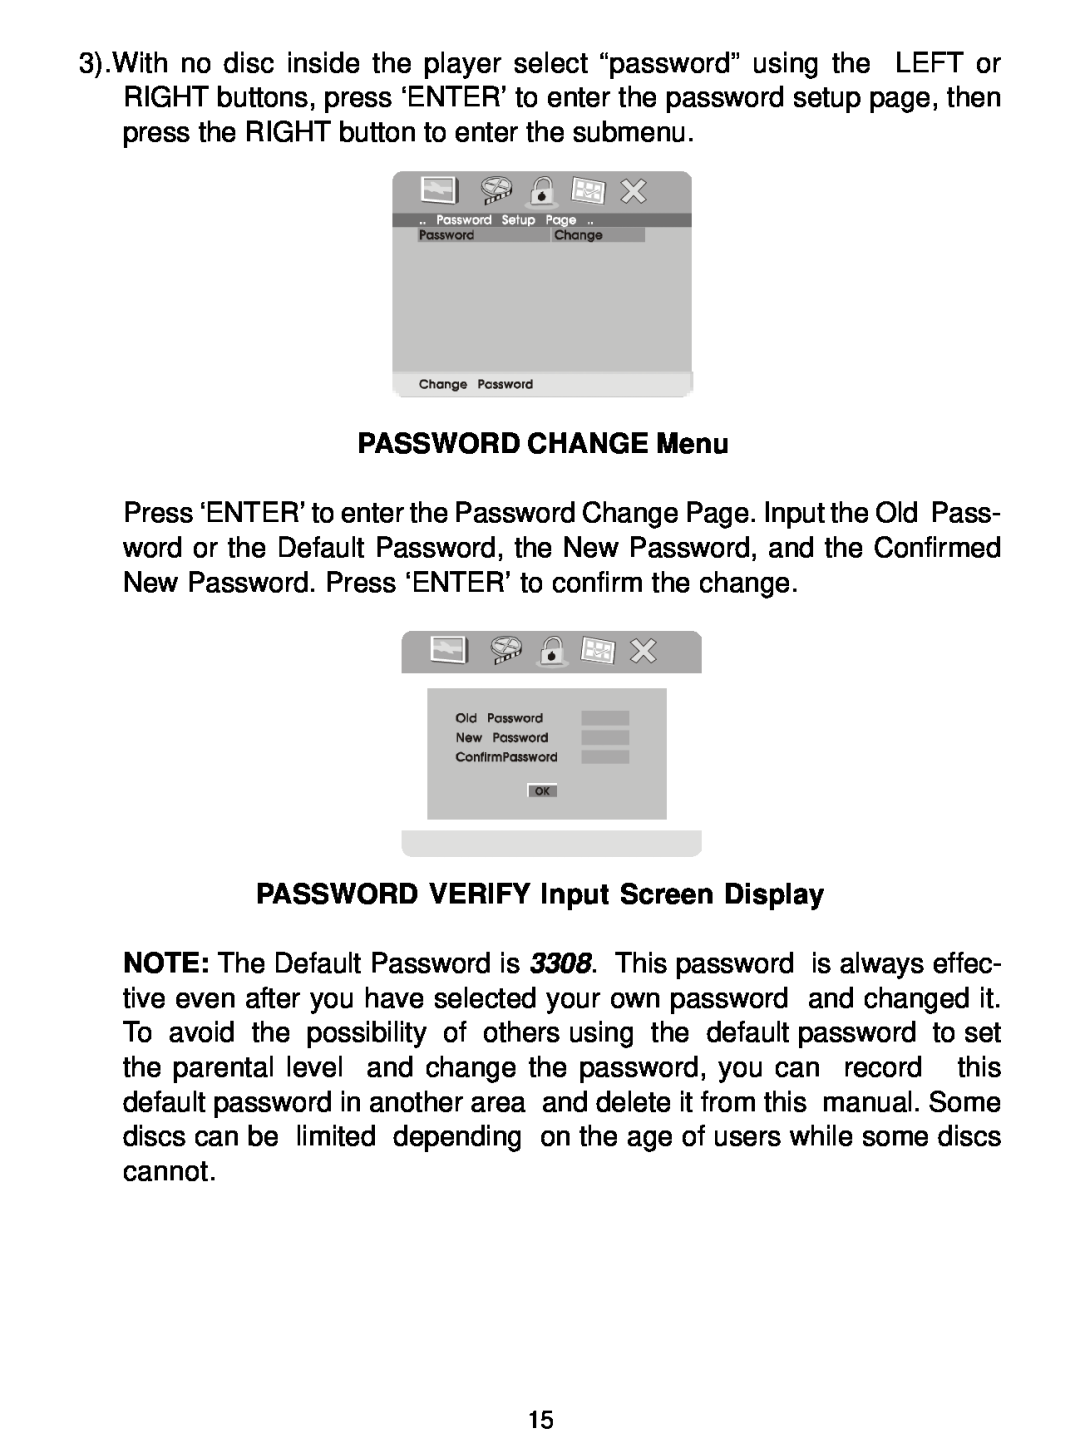 Audiovox D1726 manual PASSWORD CHANGE Menu, PASSWORD VERIFY Input Screen Display 